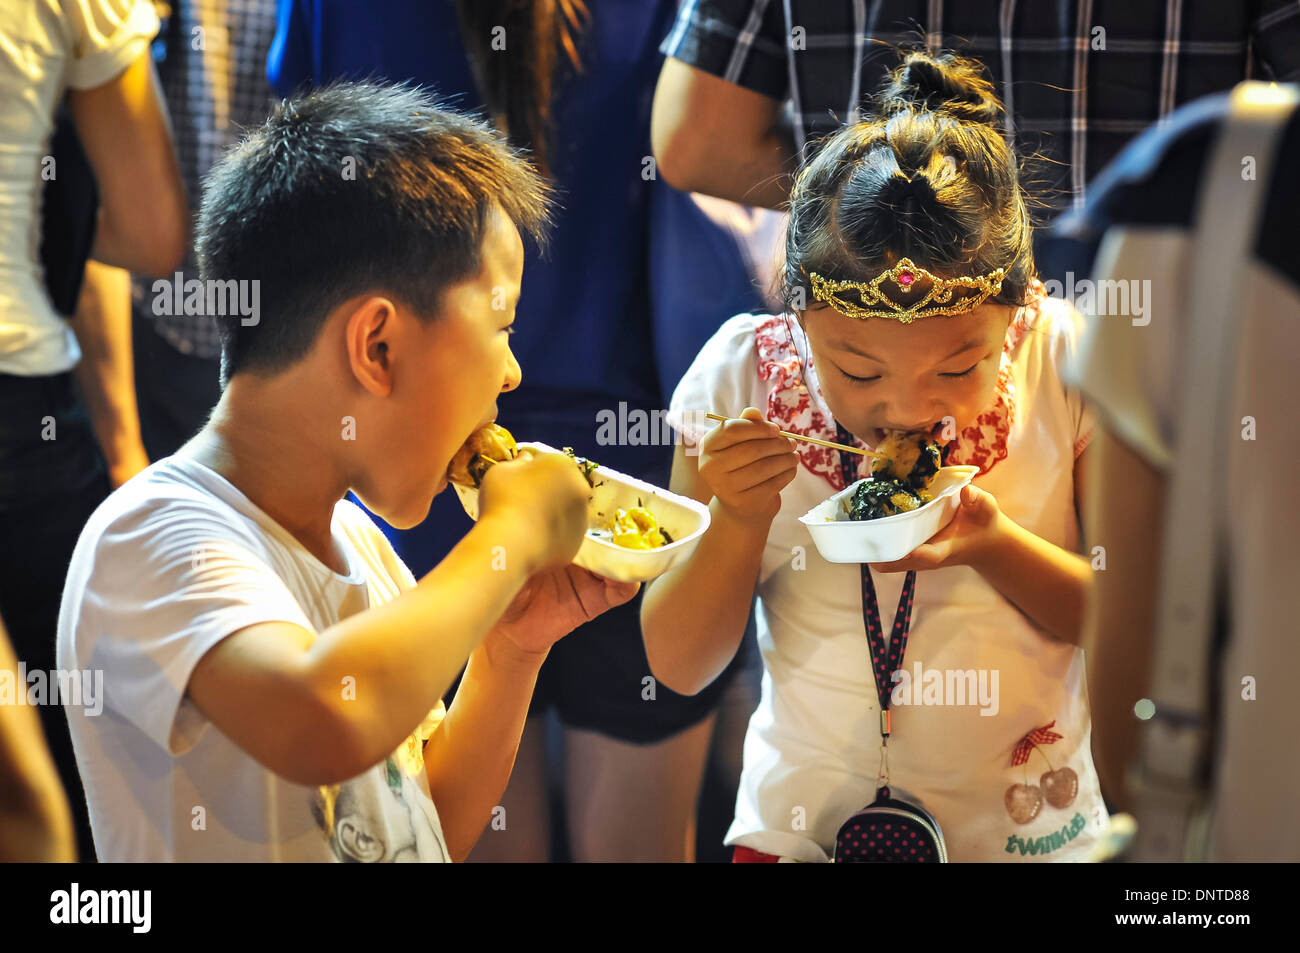 Les jeunes enfants de manger des aliments de rue, Hong Kong Banque D'Images